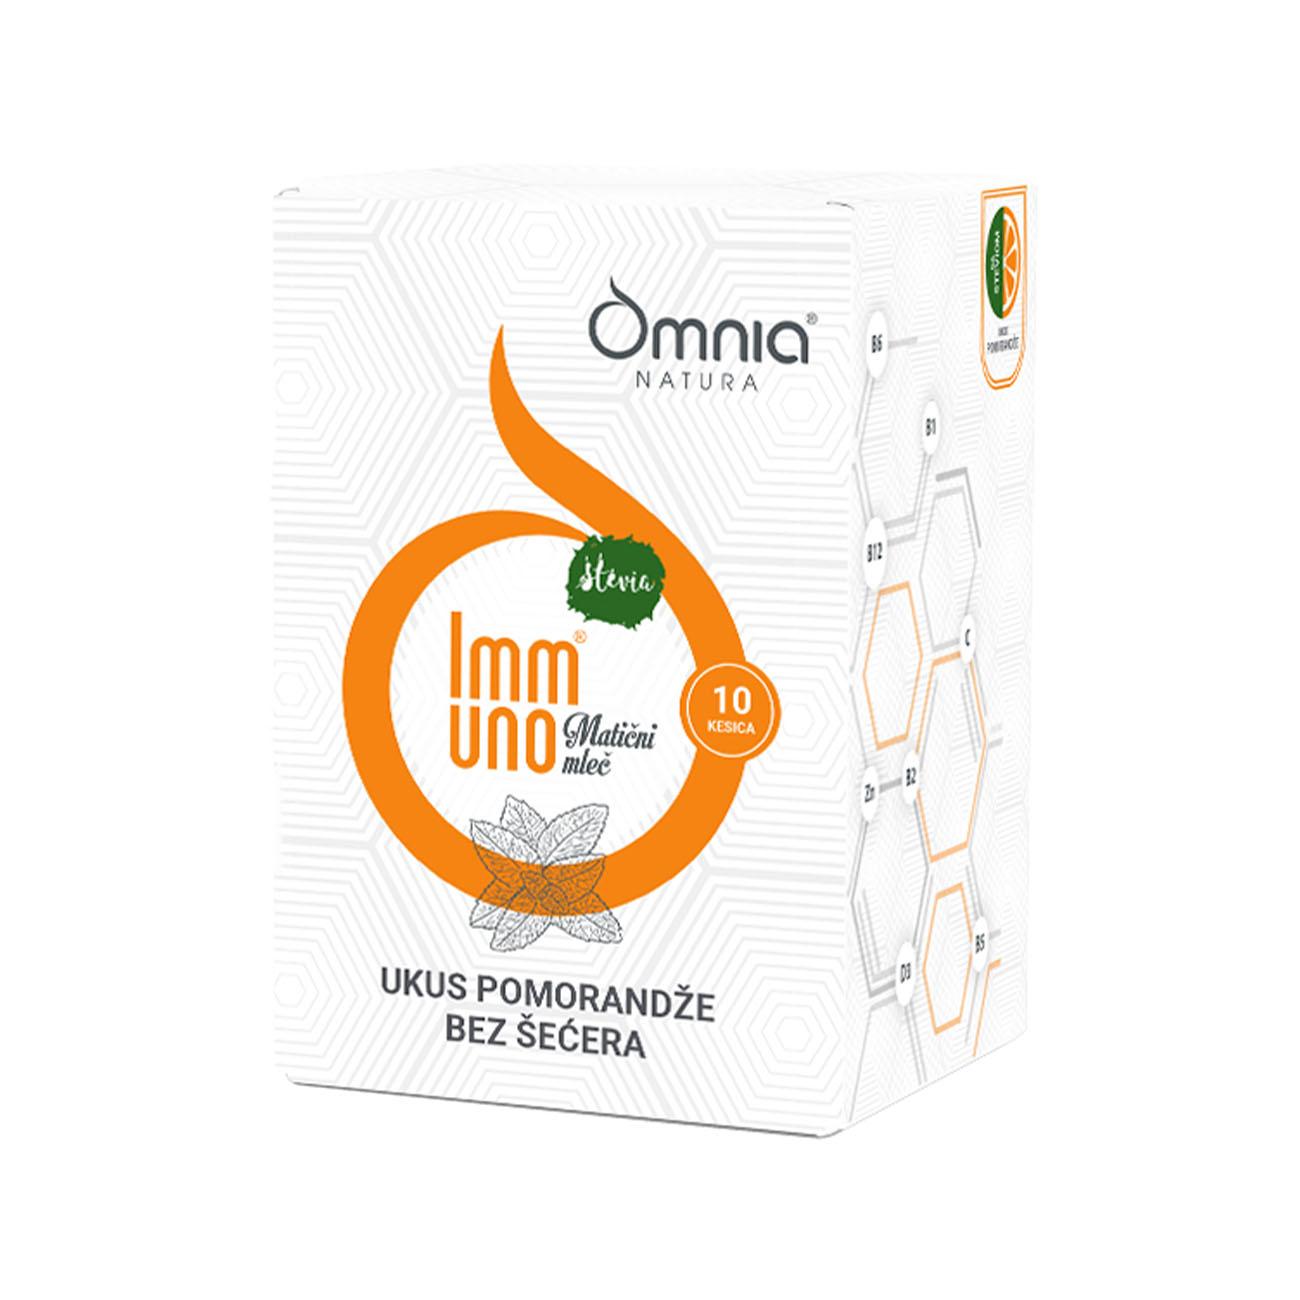 OMNIA NATURA Immuno matični mleč stevia pomorandža 10/1